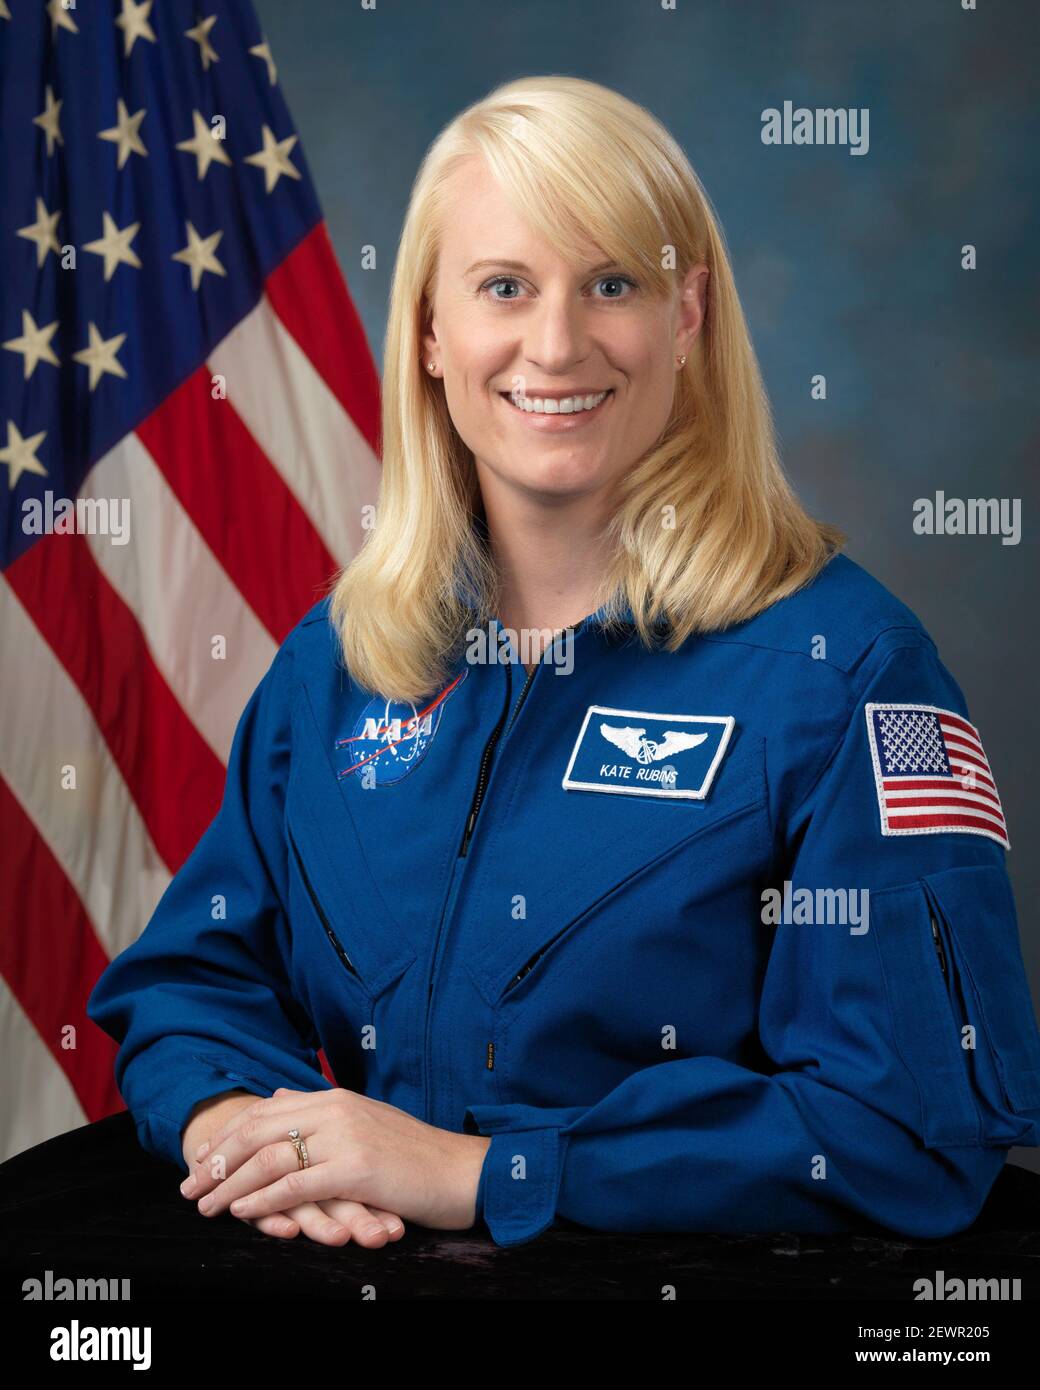 HOUSTON, TX, USA - 30. September 2009 - NASA-Astronautin Kate Rubins Astronautenkandidat Porträt im Johnson Space Center der NASA in Houston - Foto: Geop Stockfoto